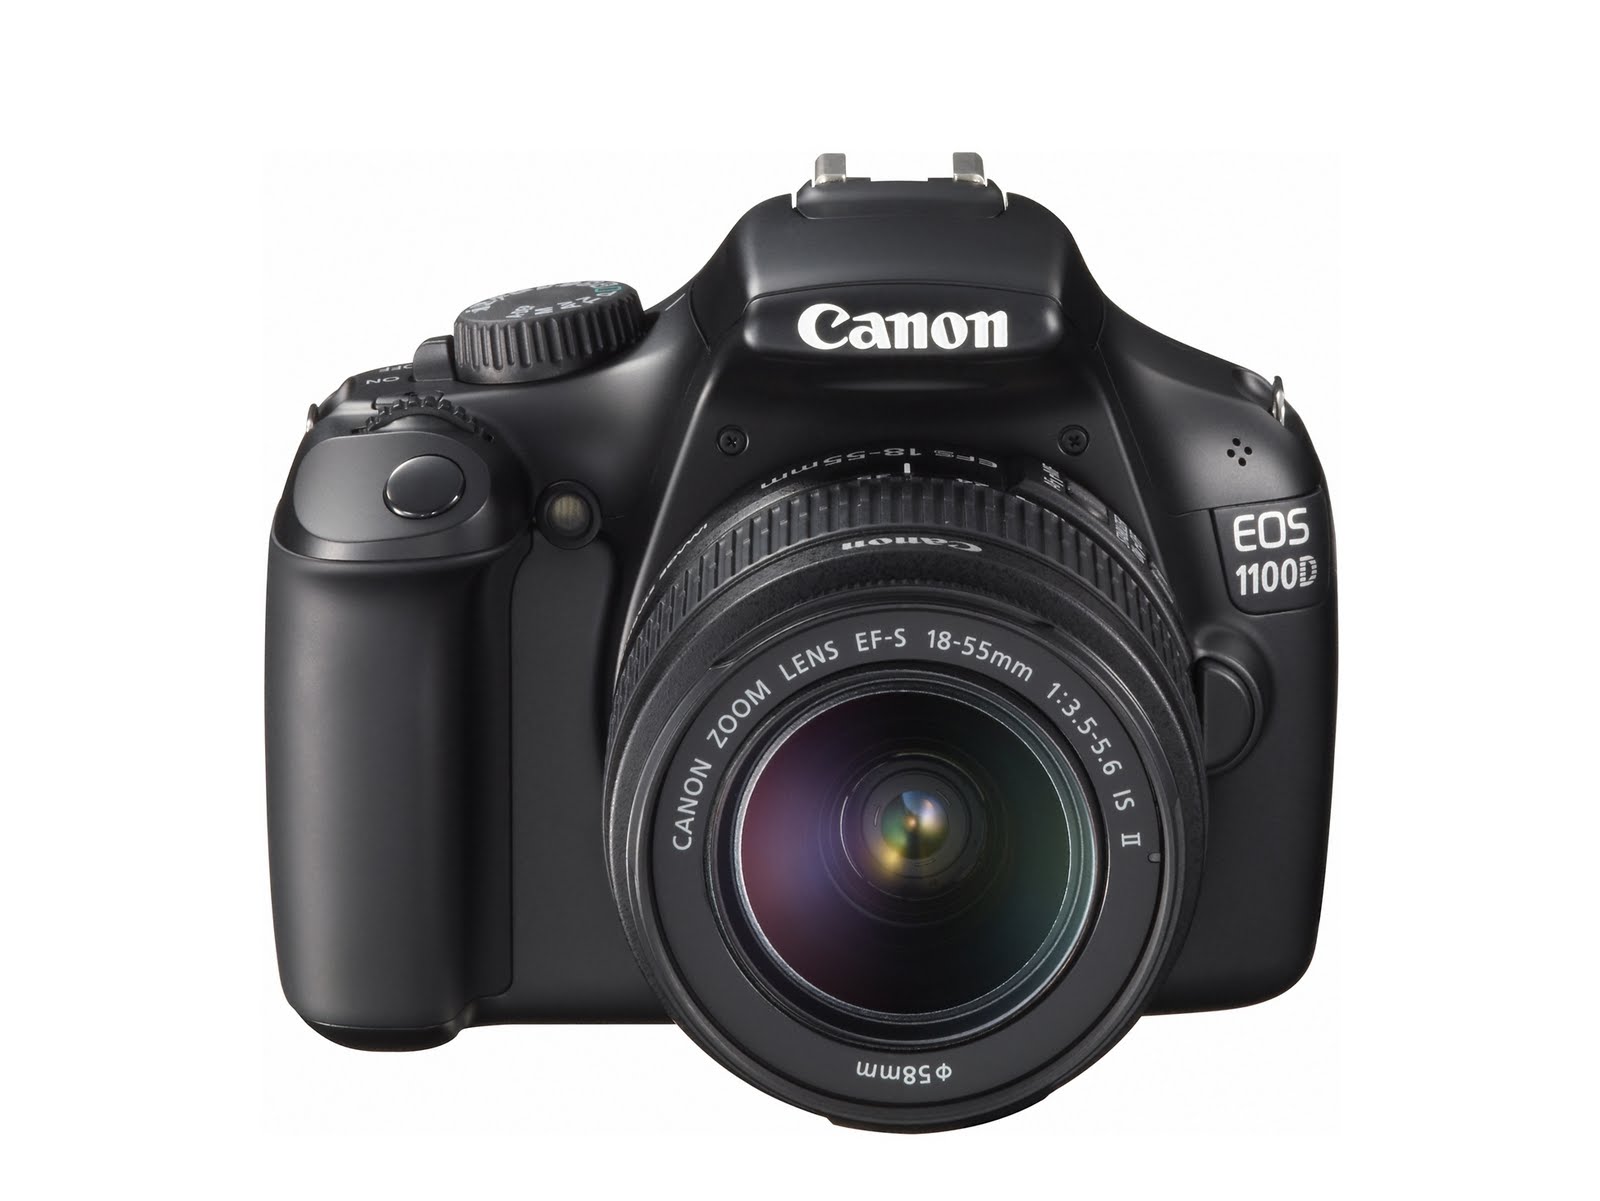 Canon EOS 1100D / Rebel T3 DSLR Camera Technical Specs